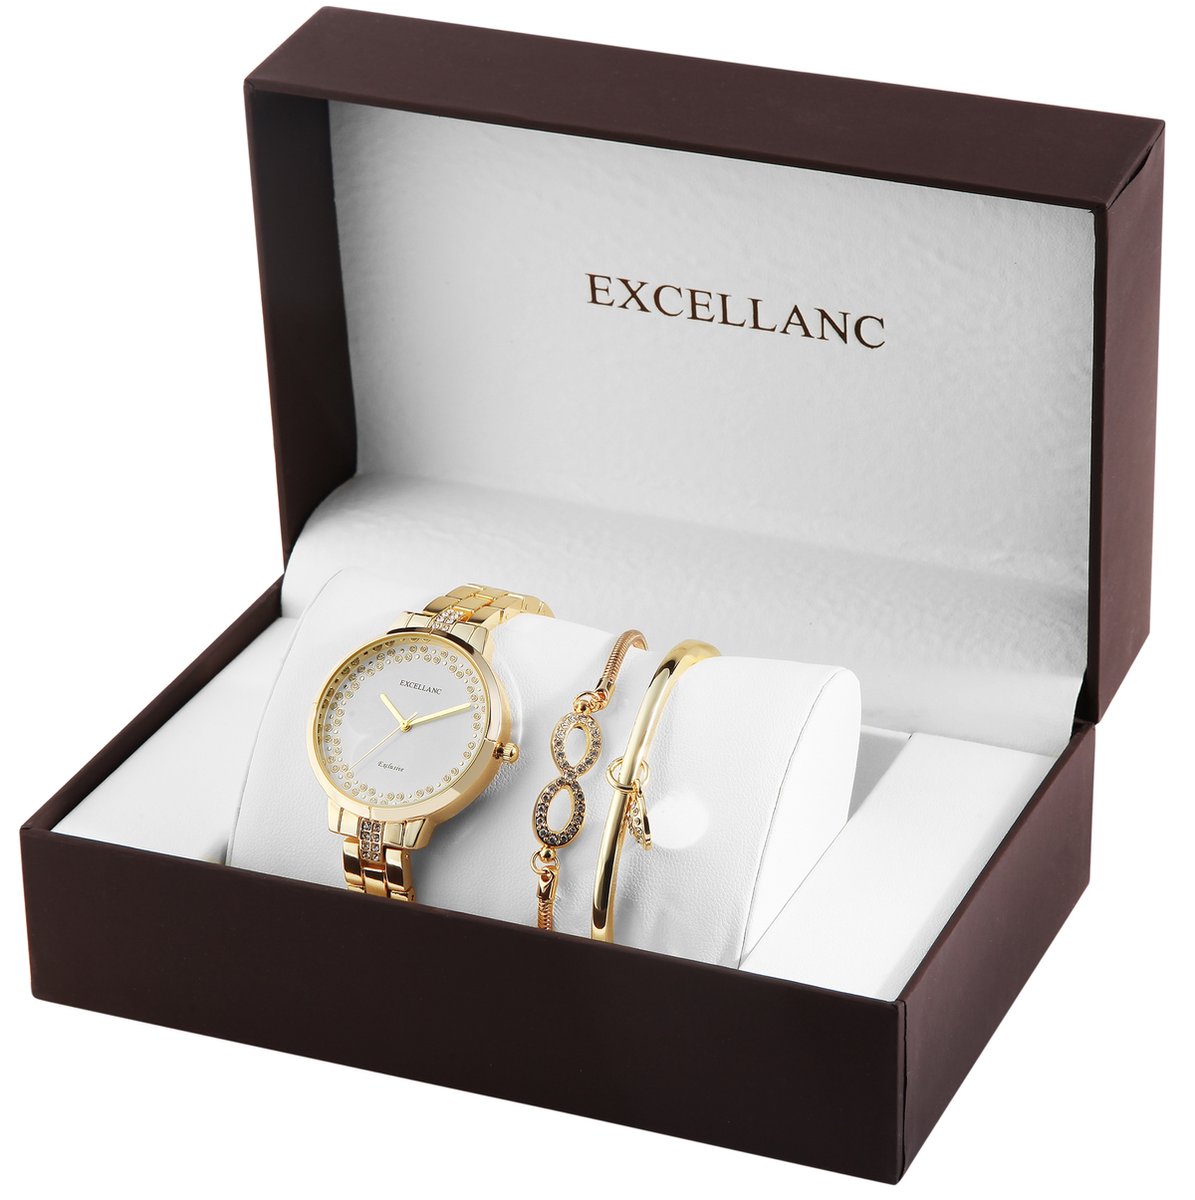 Excellanc horlogeset - giftset dameshorloge met 2 armbanden - goudkleurig